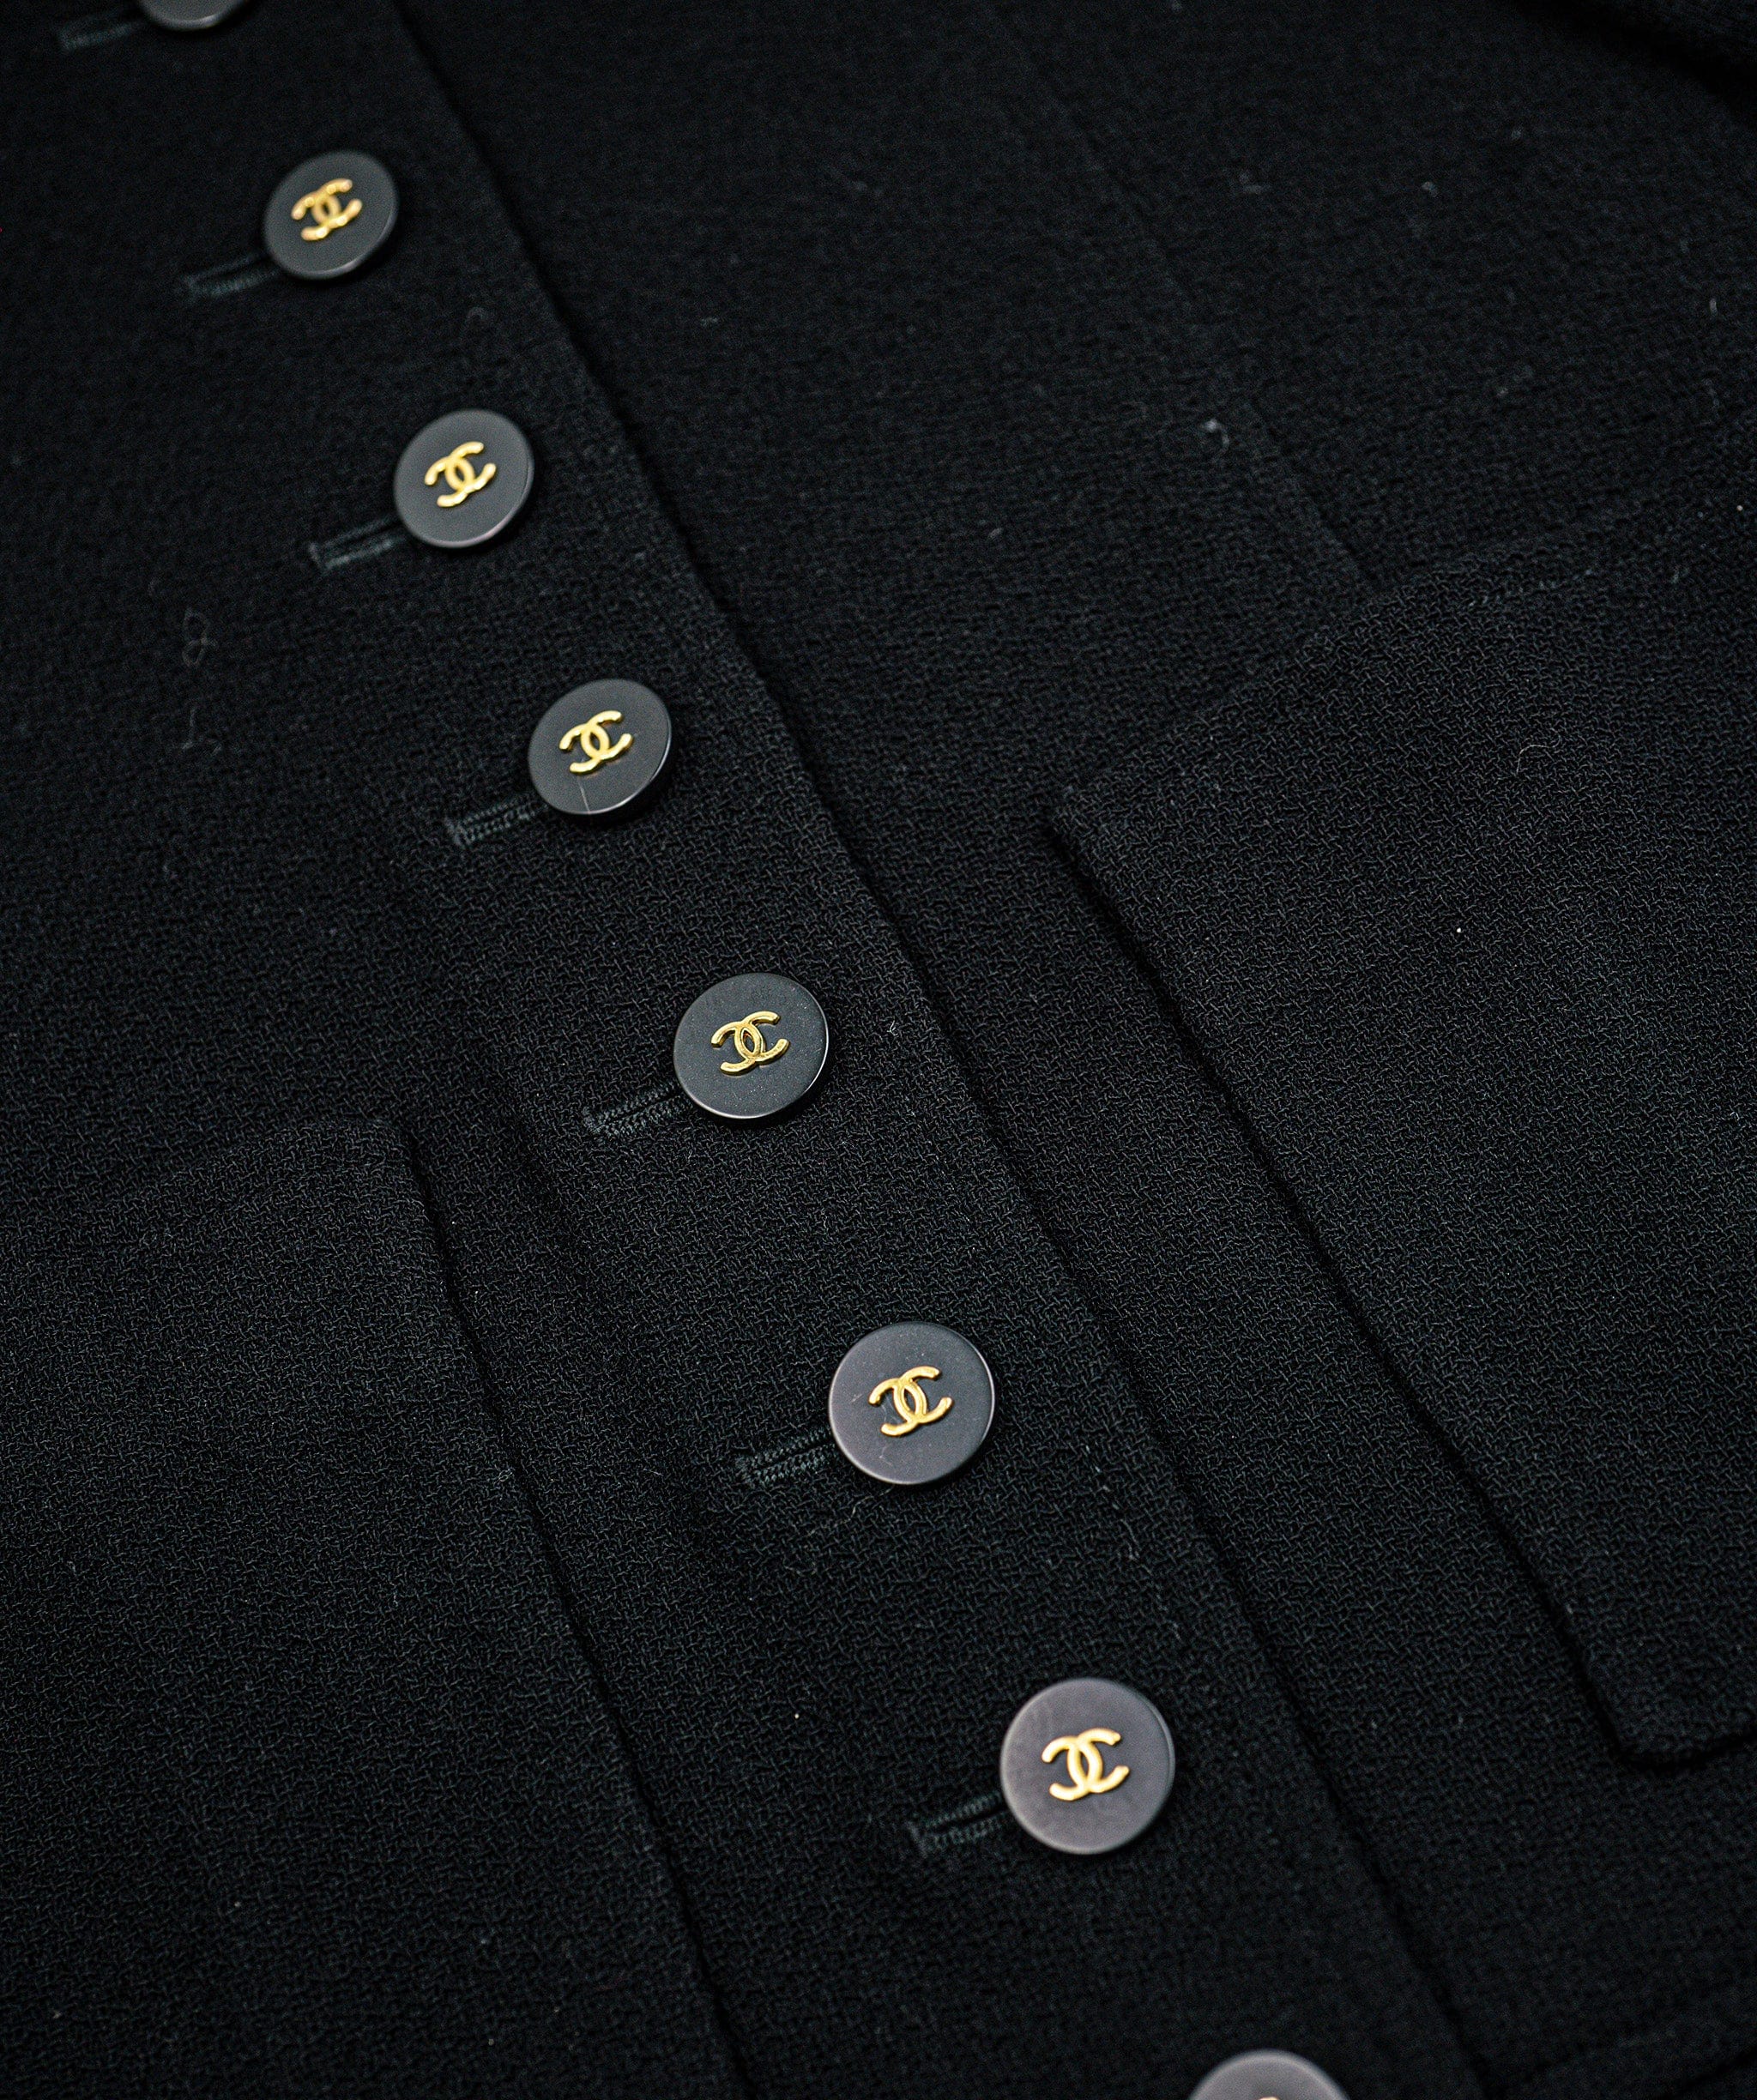 Chanel Chanel Big CC Buttons Long Jacket Black ASL5024